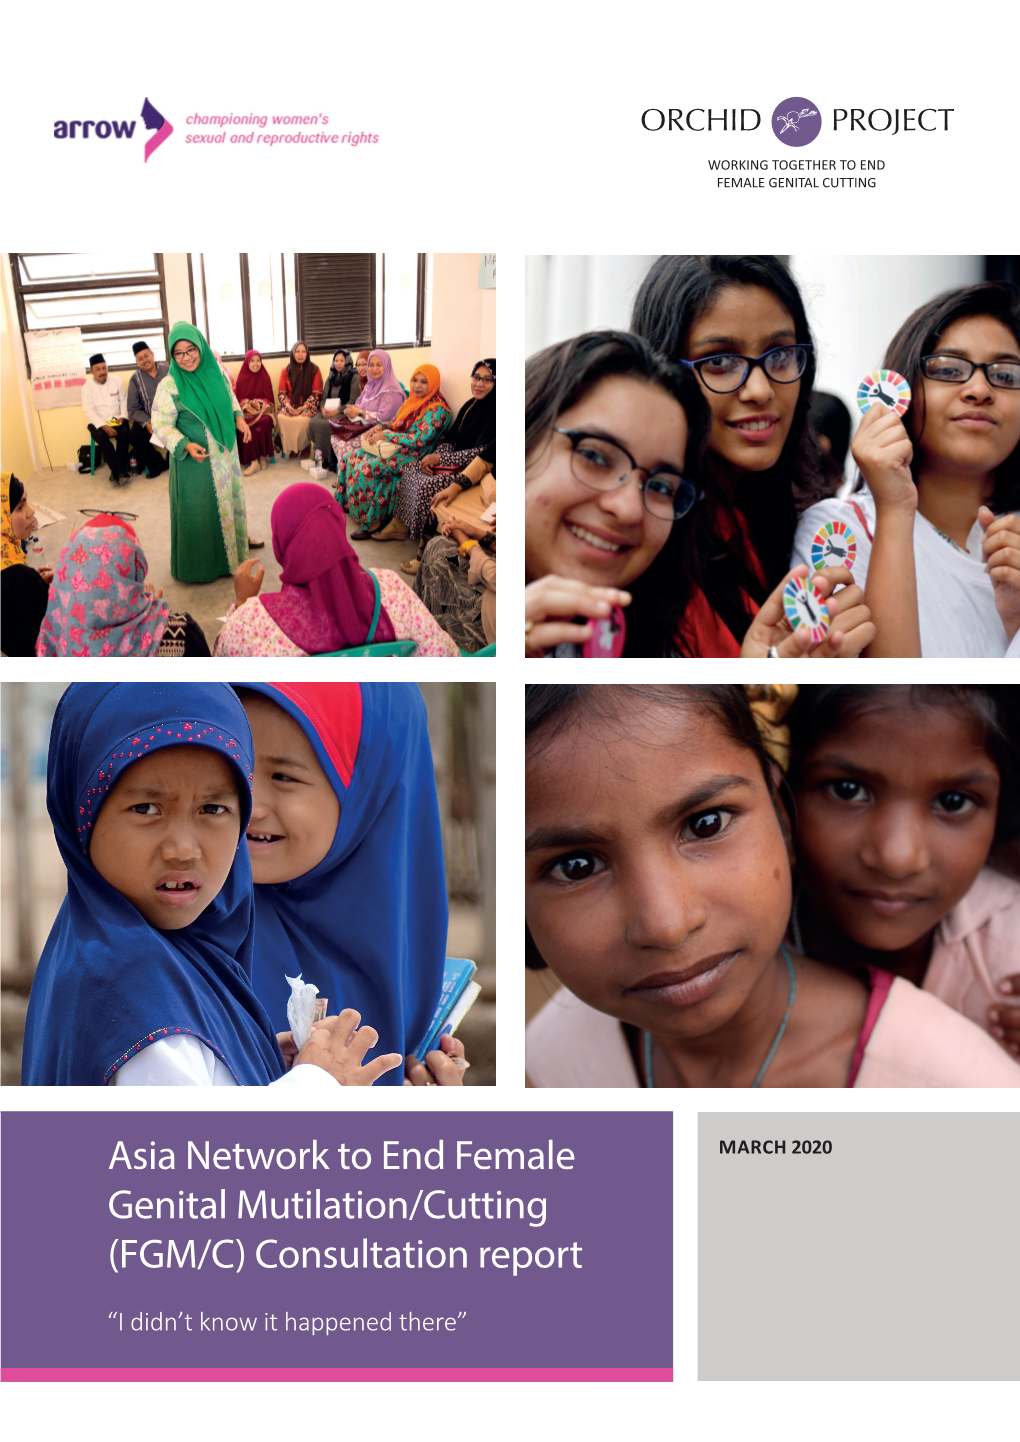 Asia Network to End Female Genital Mutilation/Cutting (FGM/C